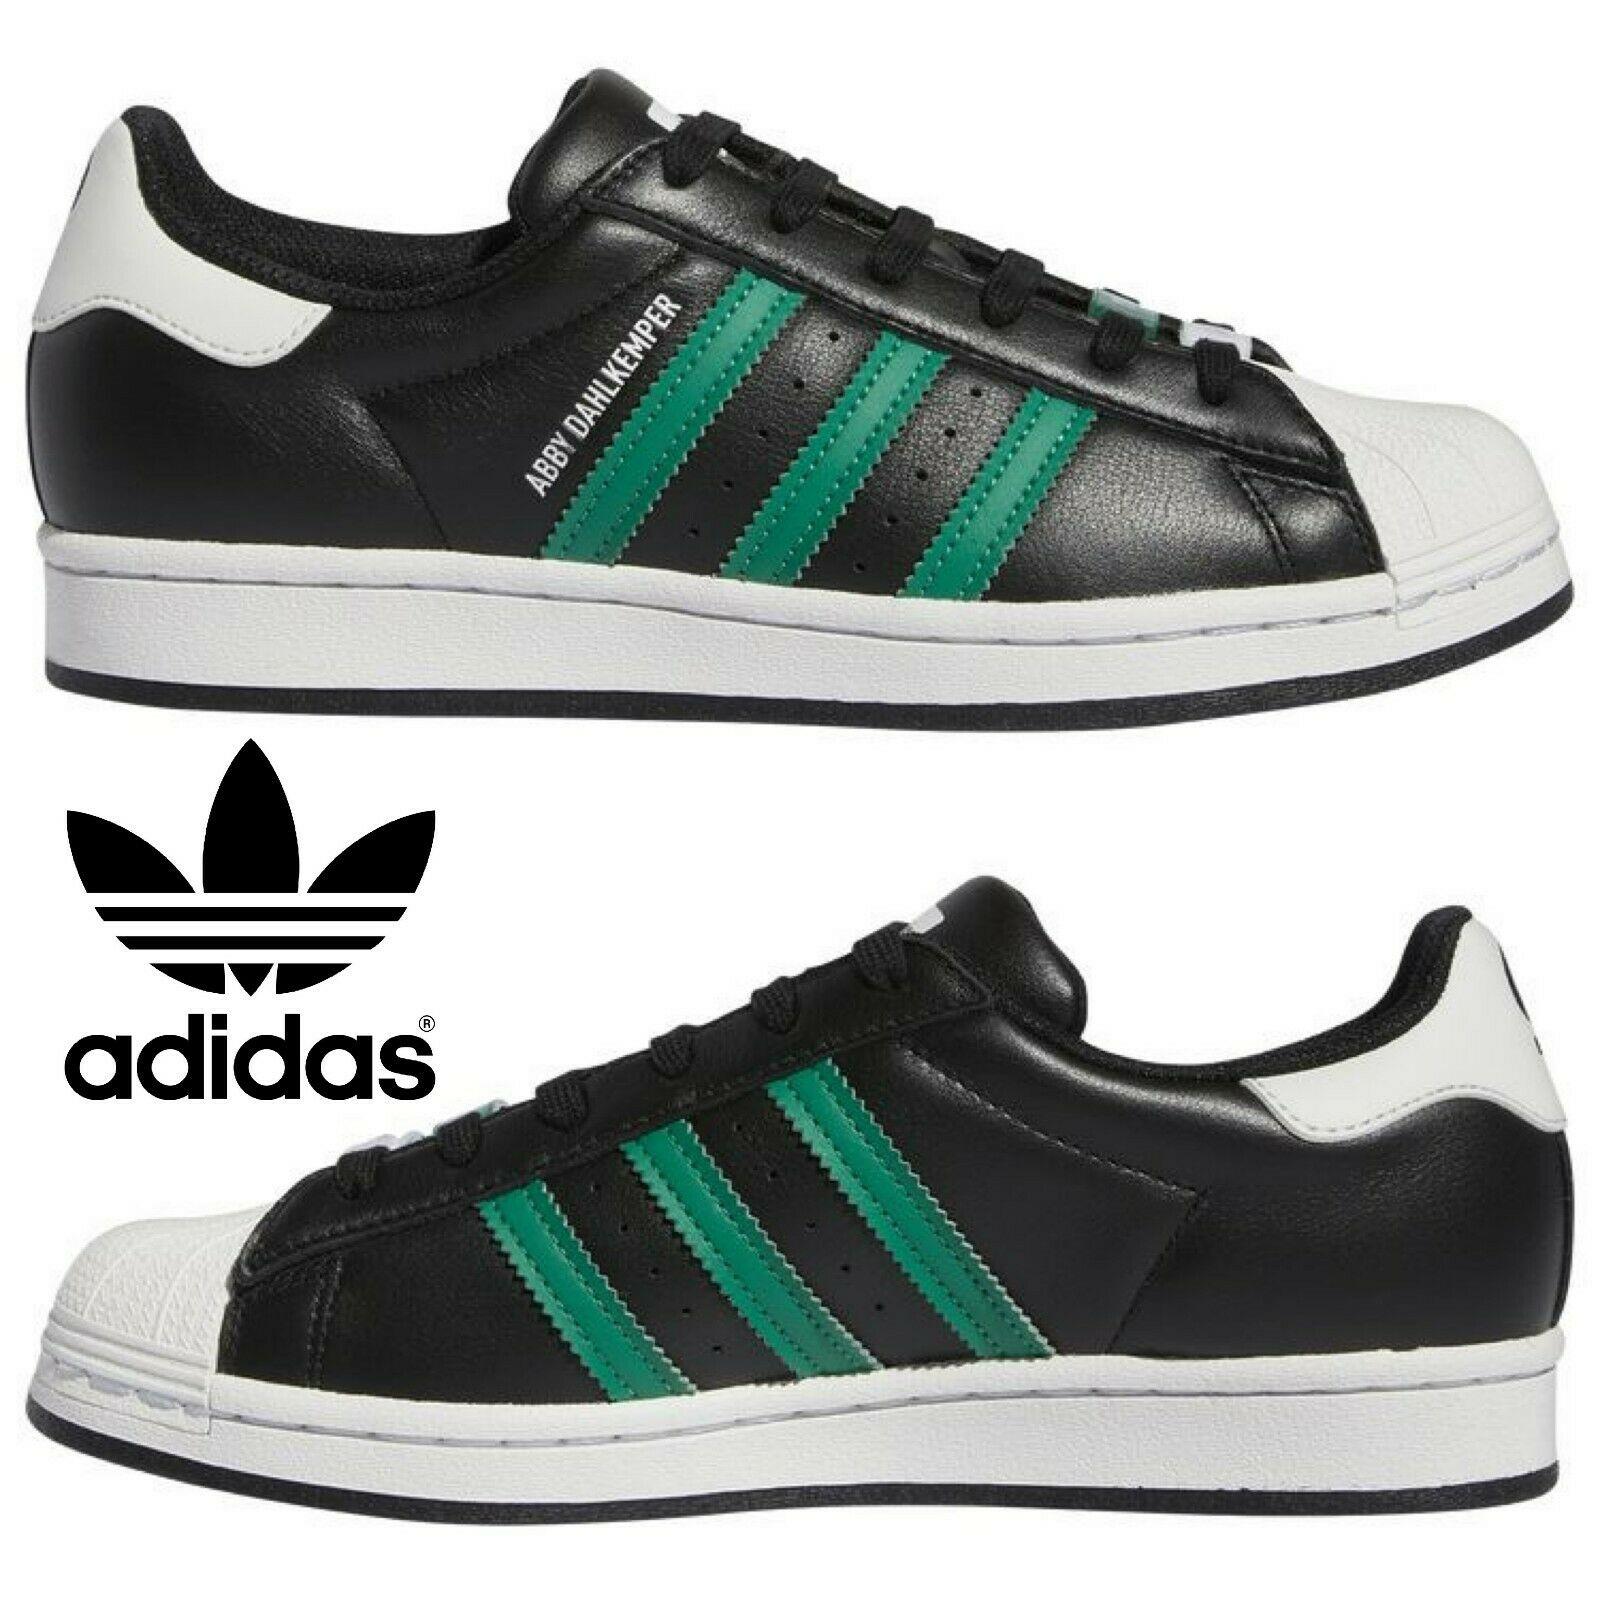 Adidas Originals Superstar Women s Sneakers Casual Shoes Sport Gym Black Green - Black , Black/Green Manufacturer